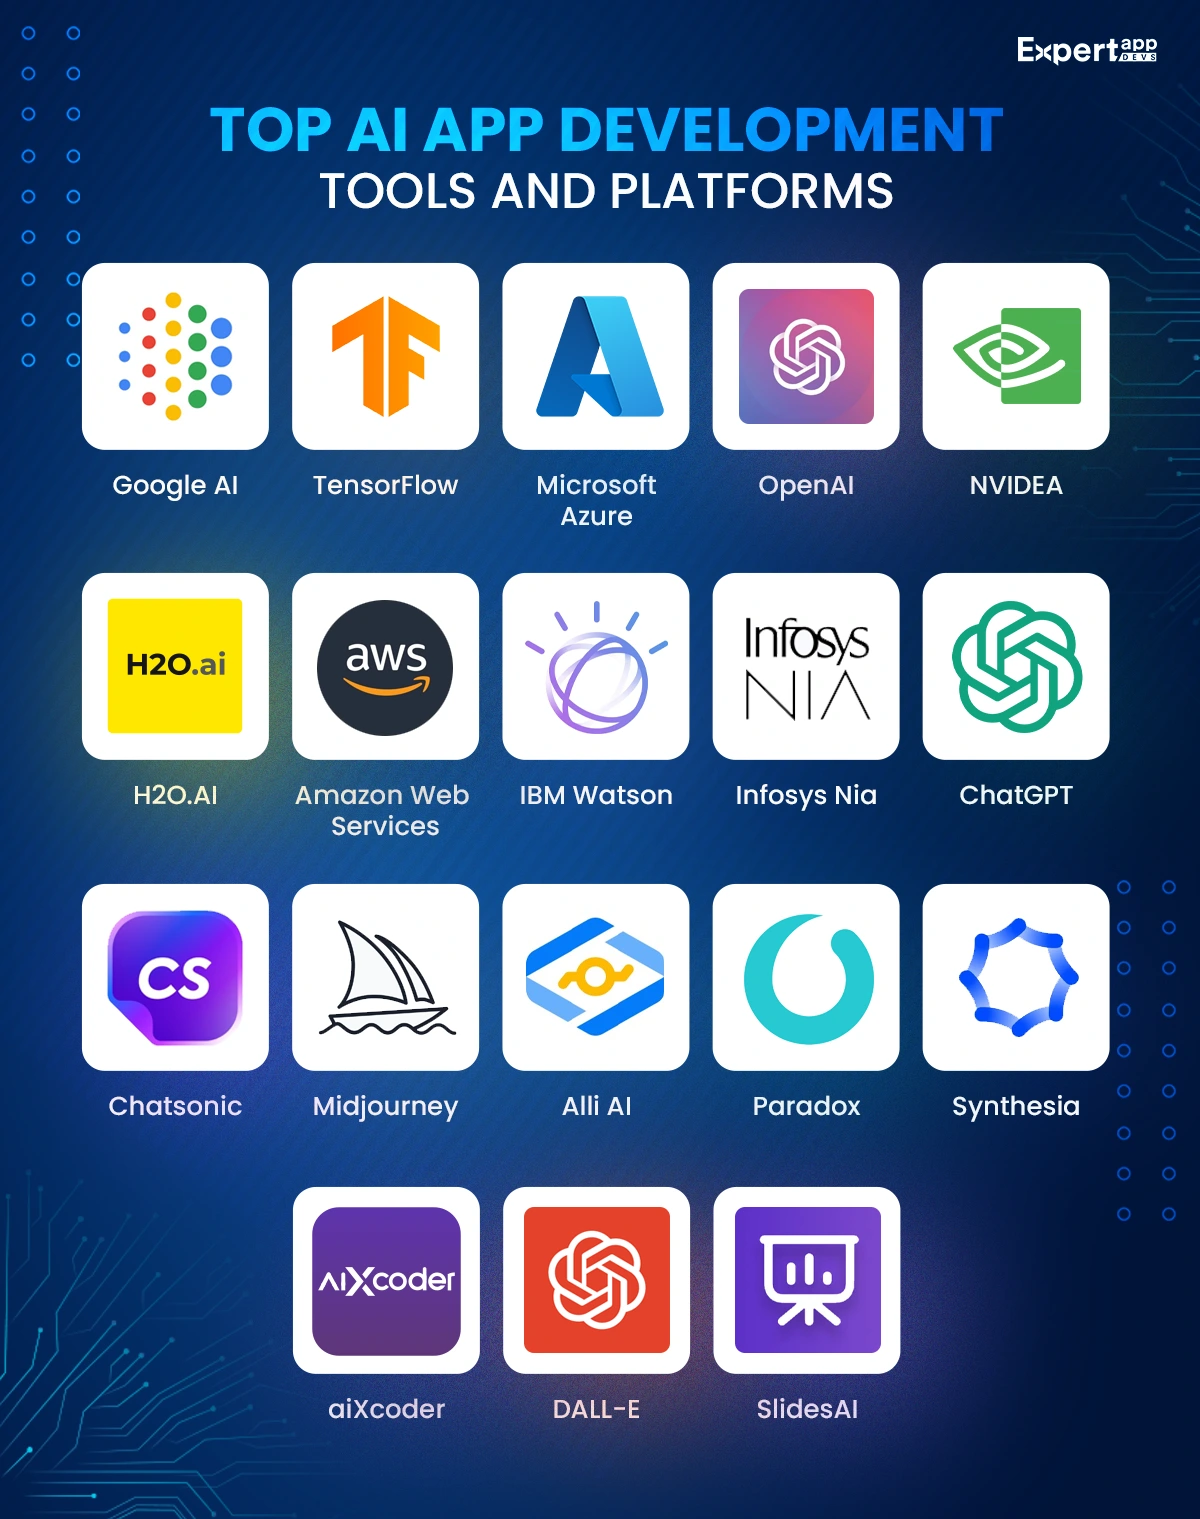 Top AI App Development Tools and Platforms